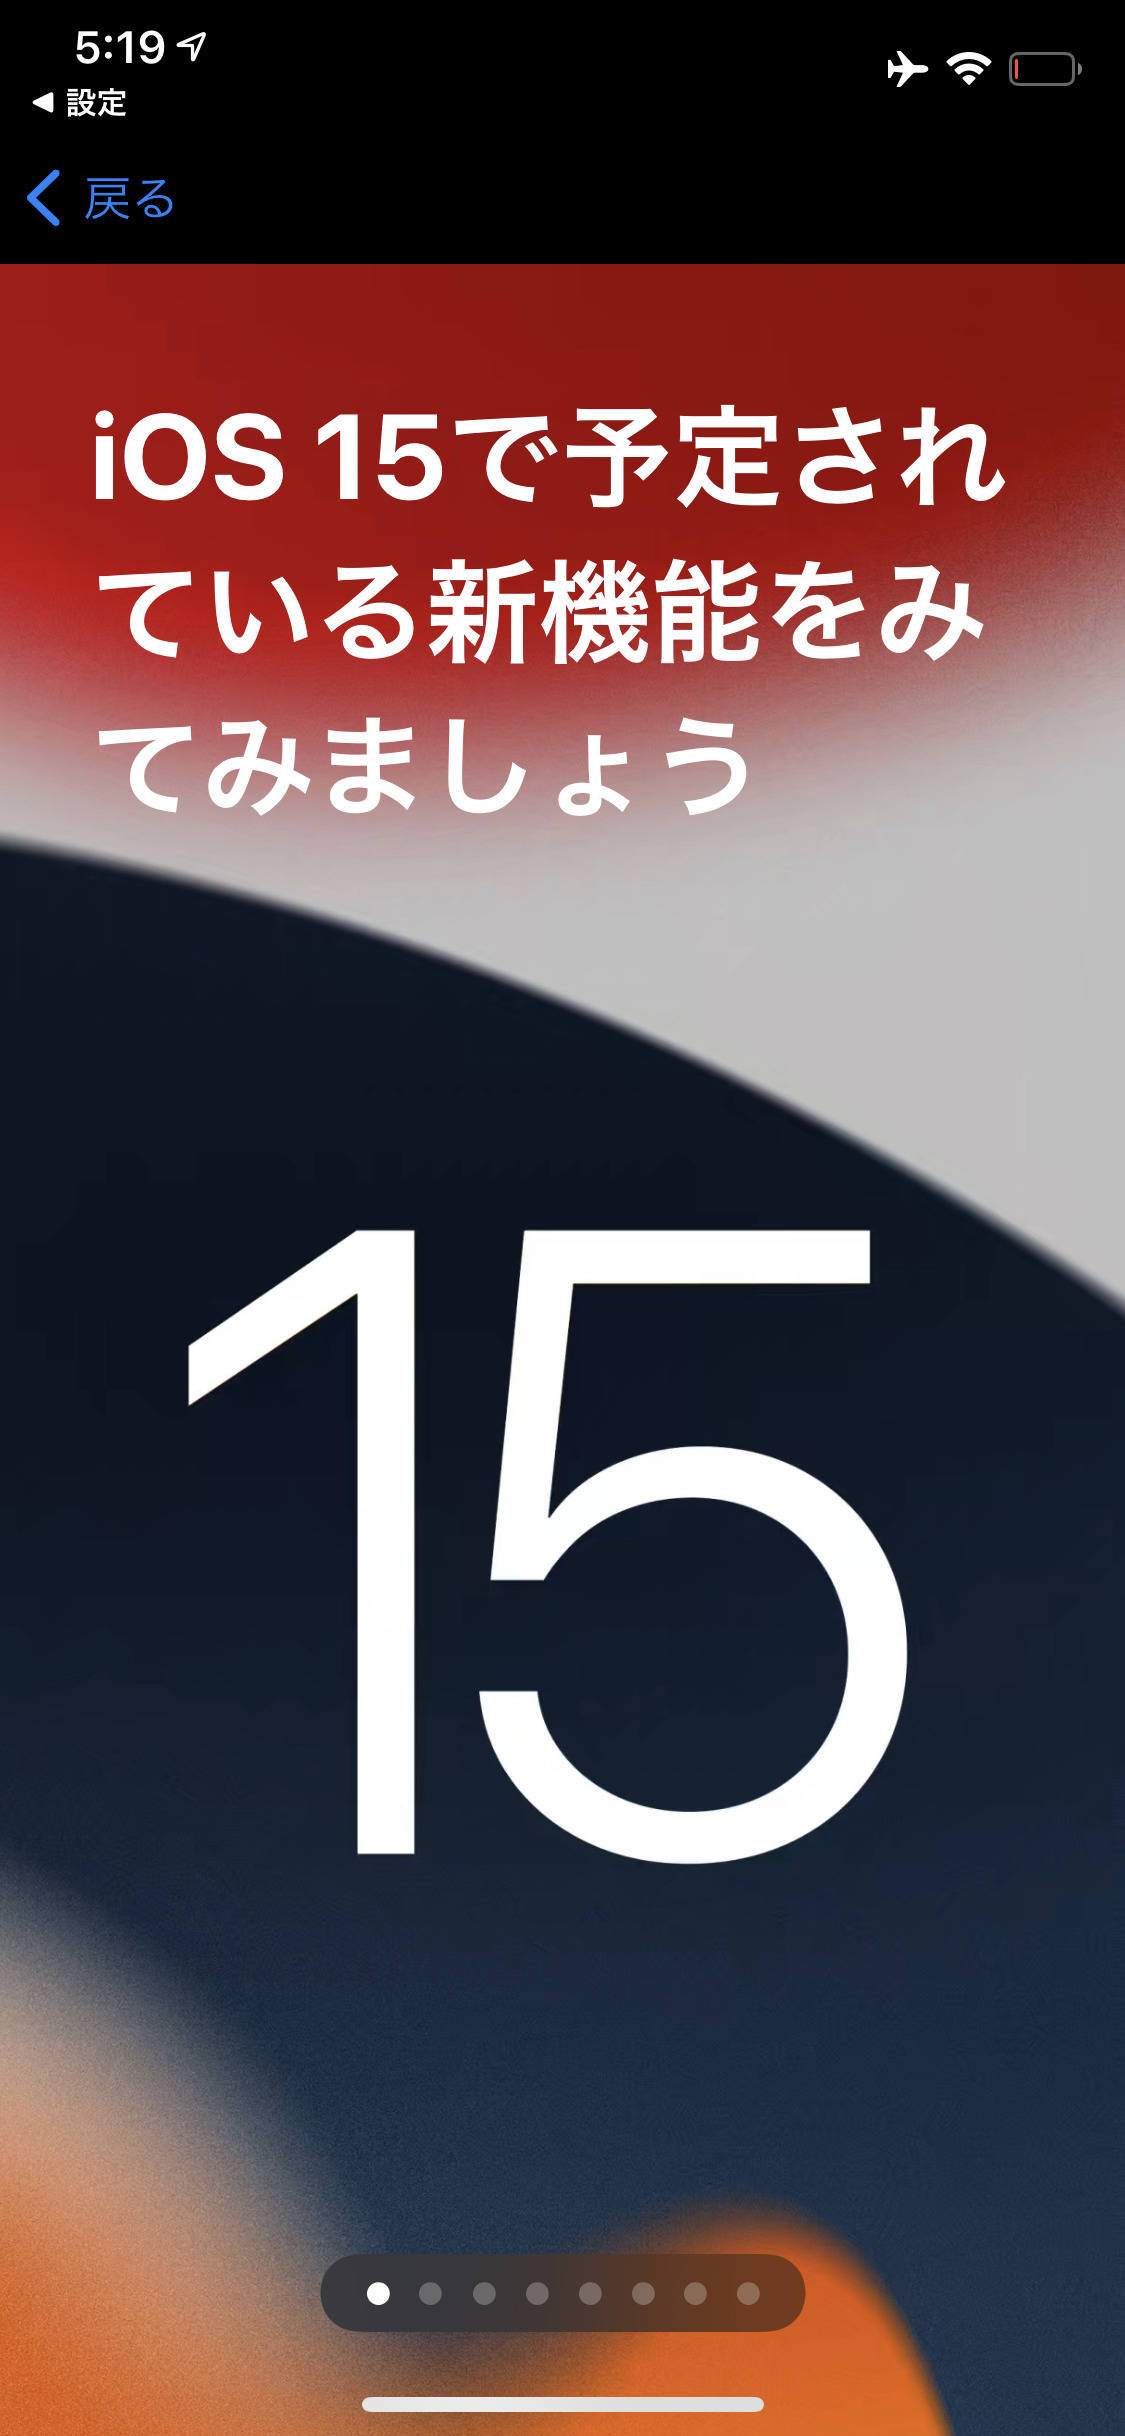 iOS 15/WatchOS 8が配信開始